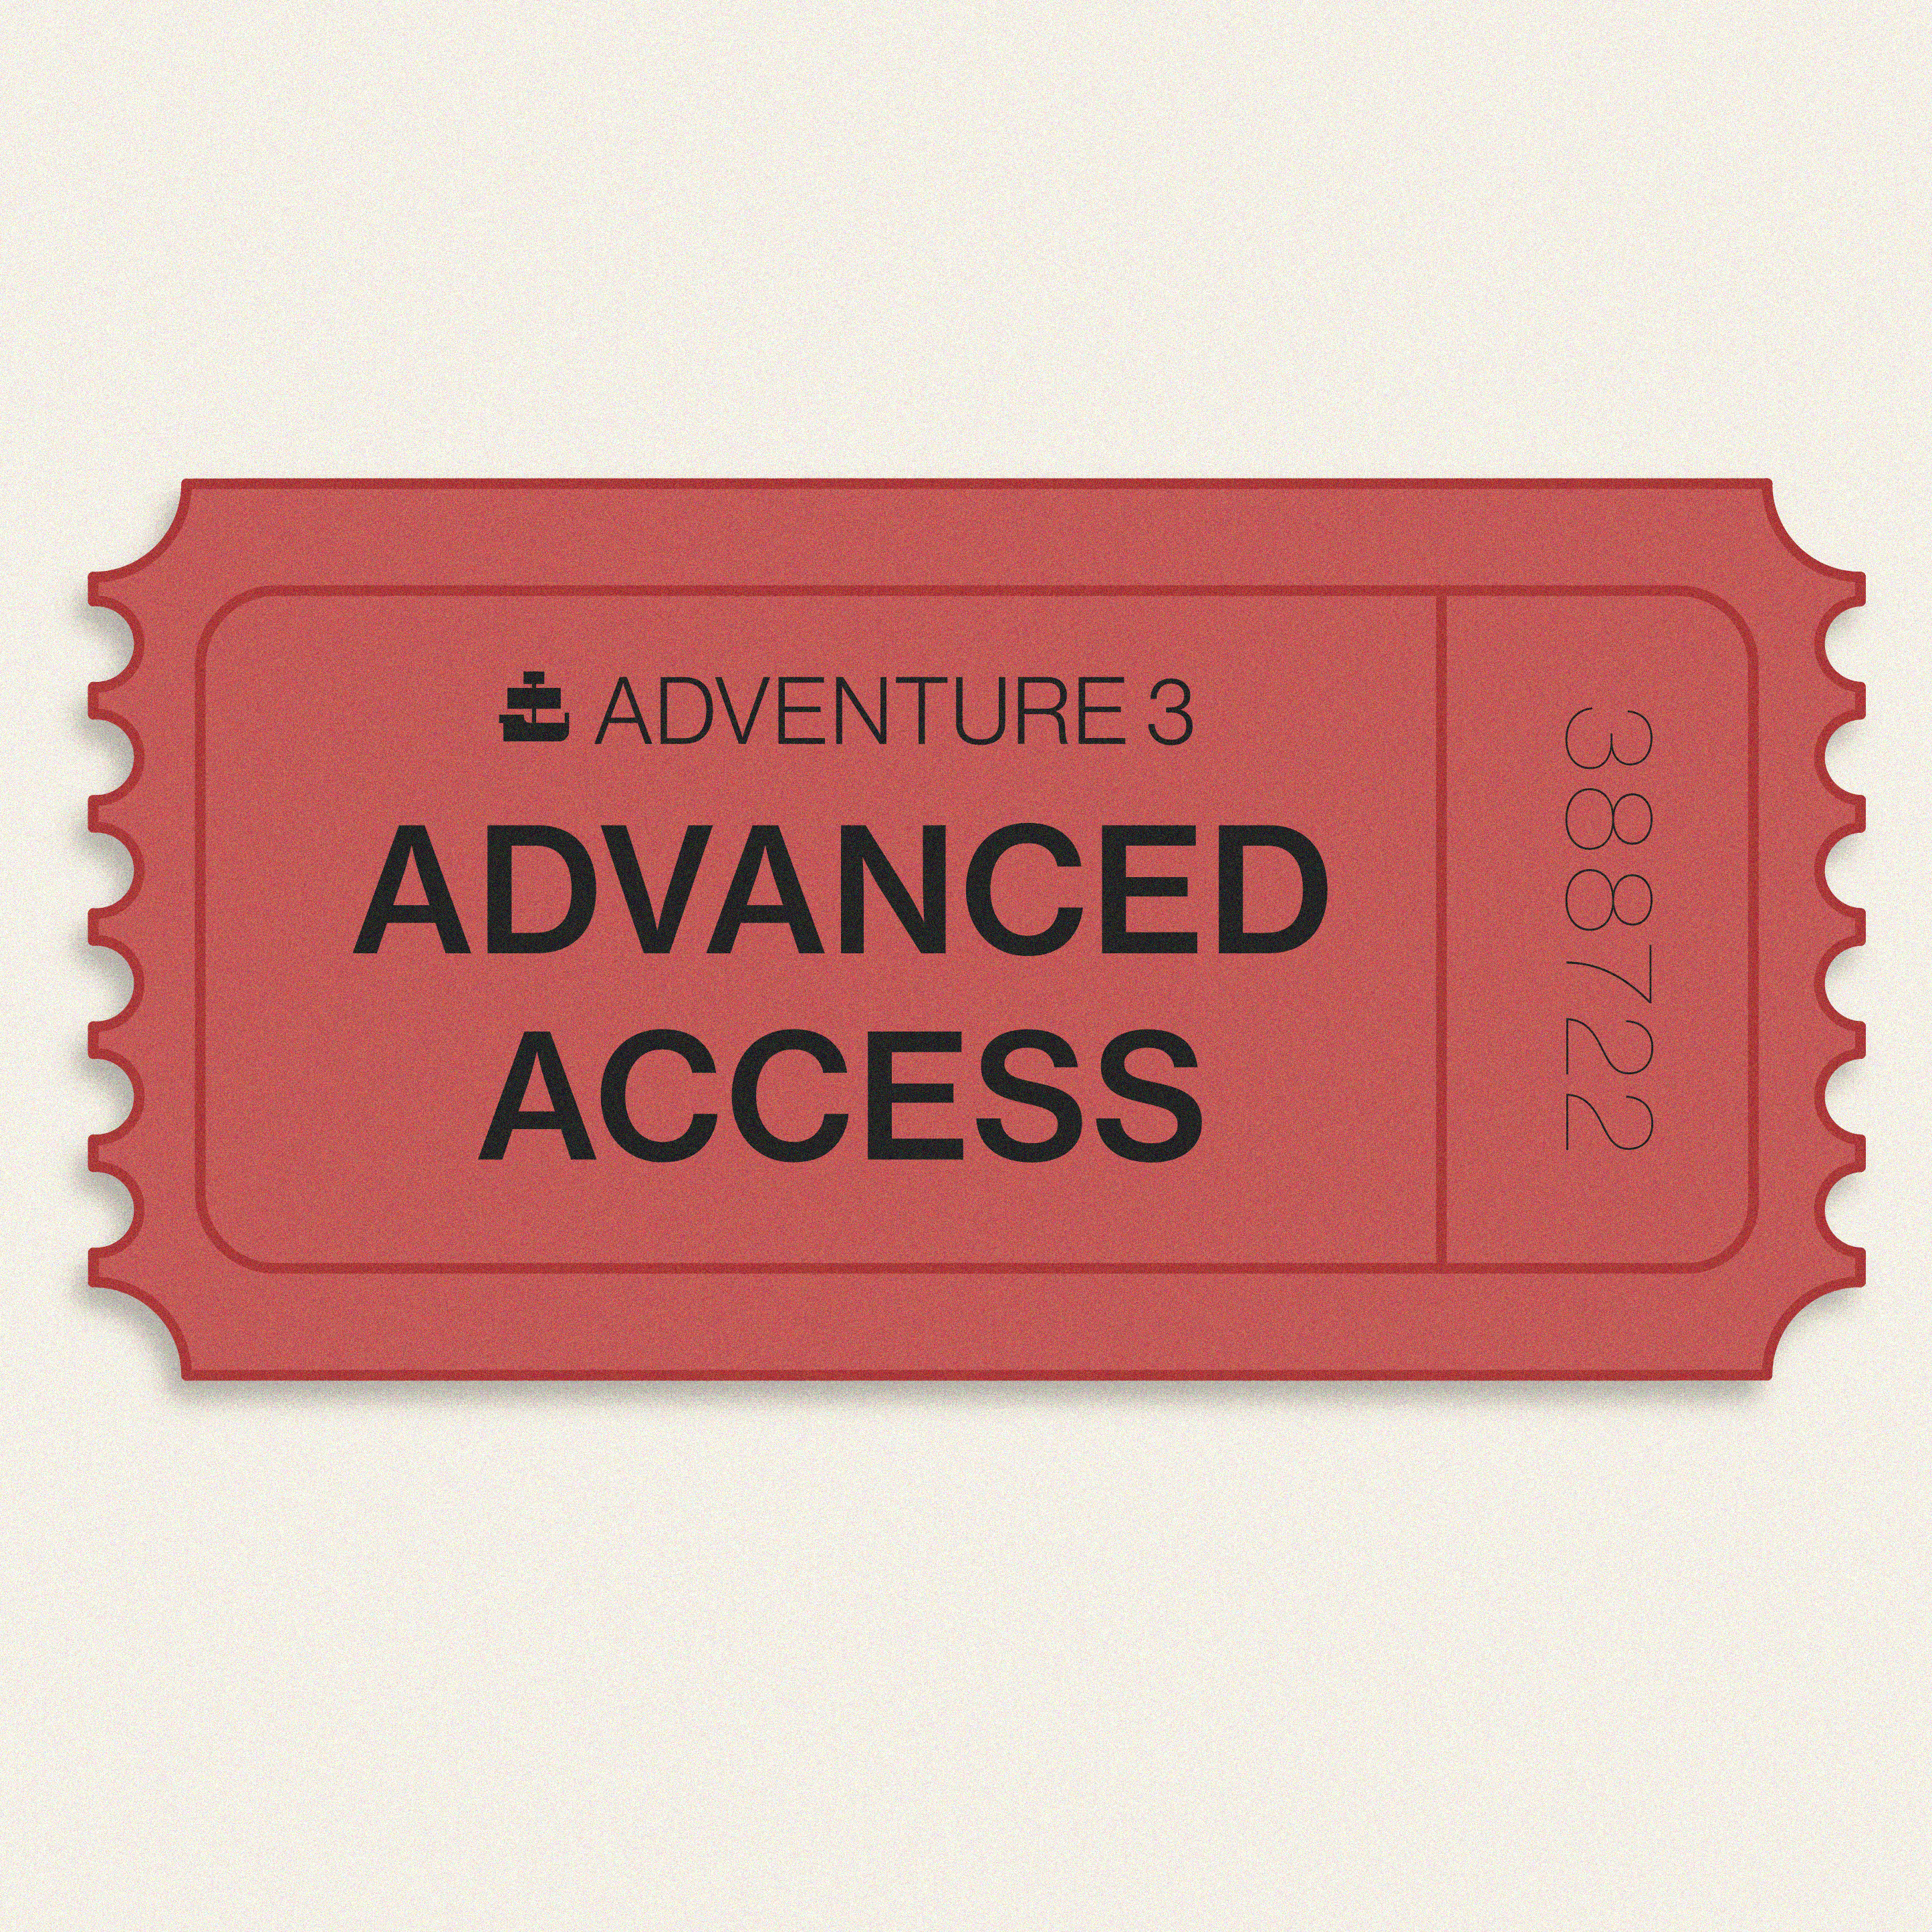 Adventure 3 - Advanced Access Ticket